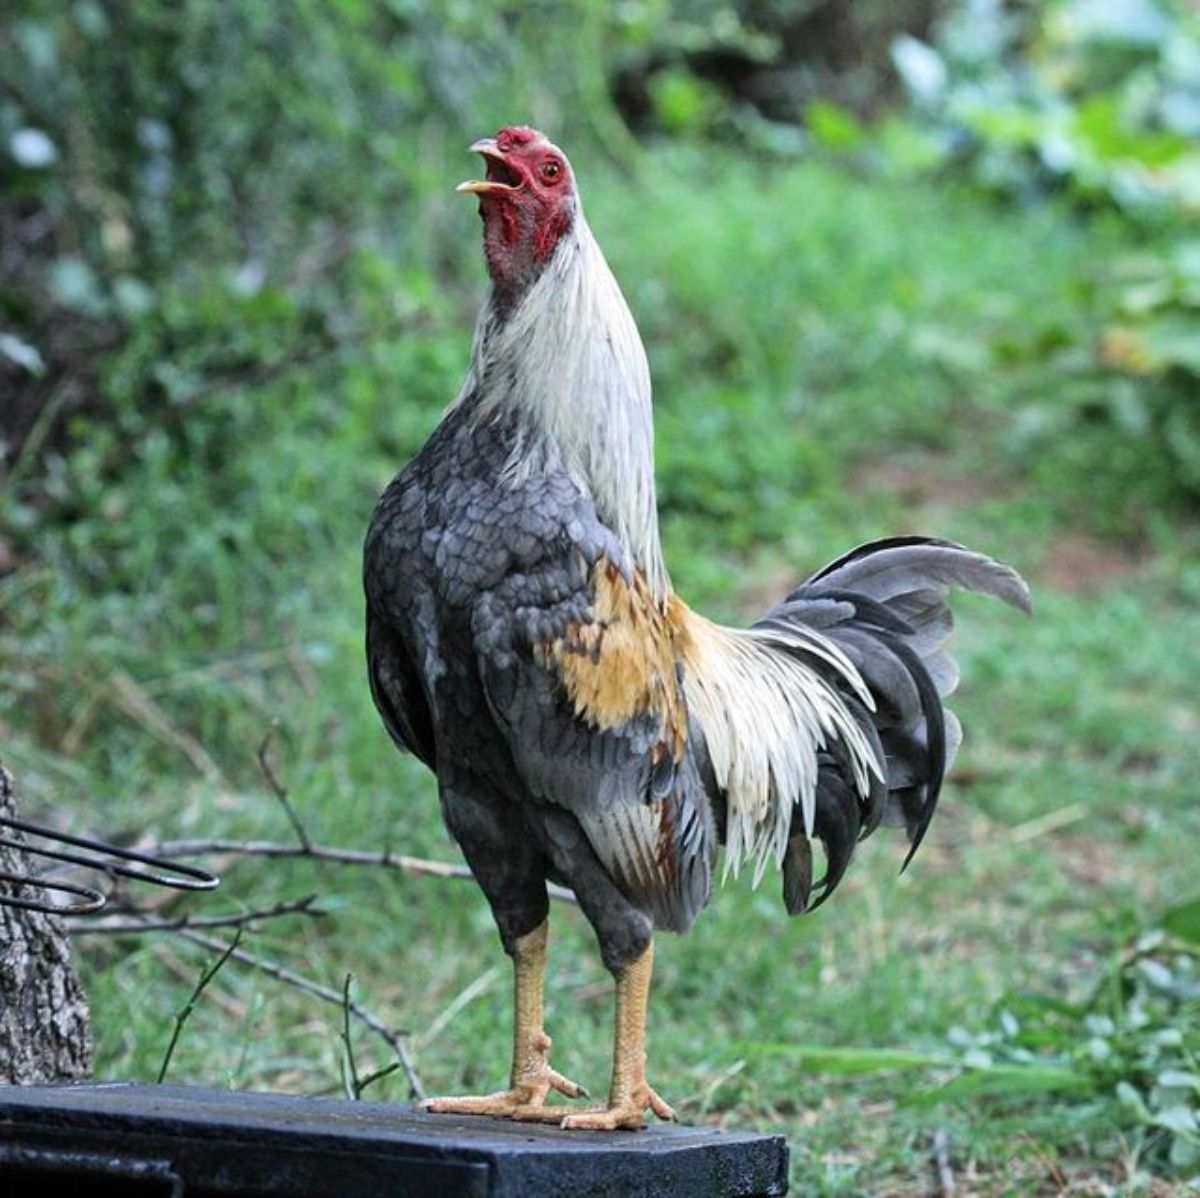 A big crowing Kraienkoppe rooster in a backyard.